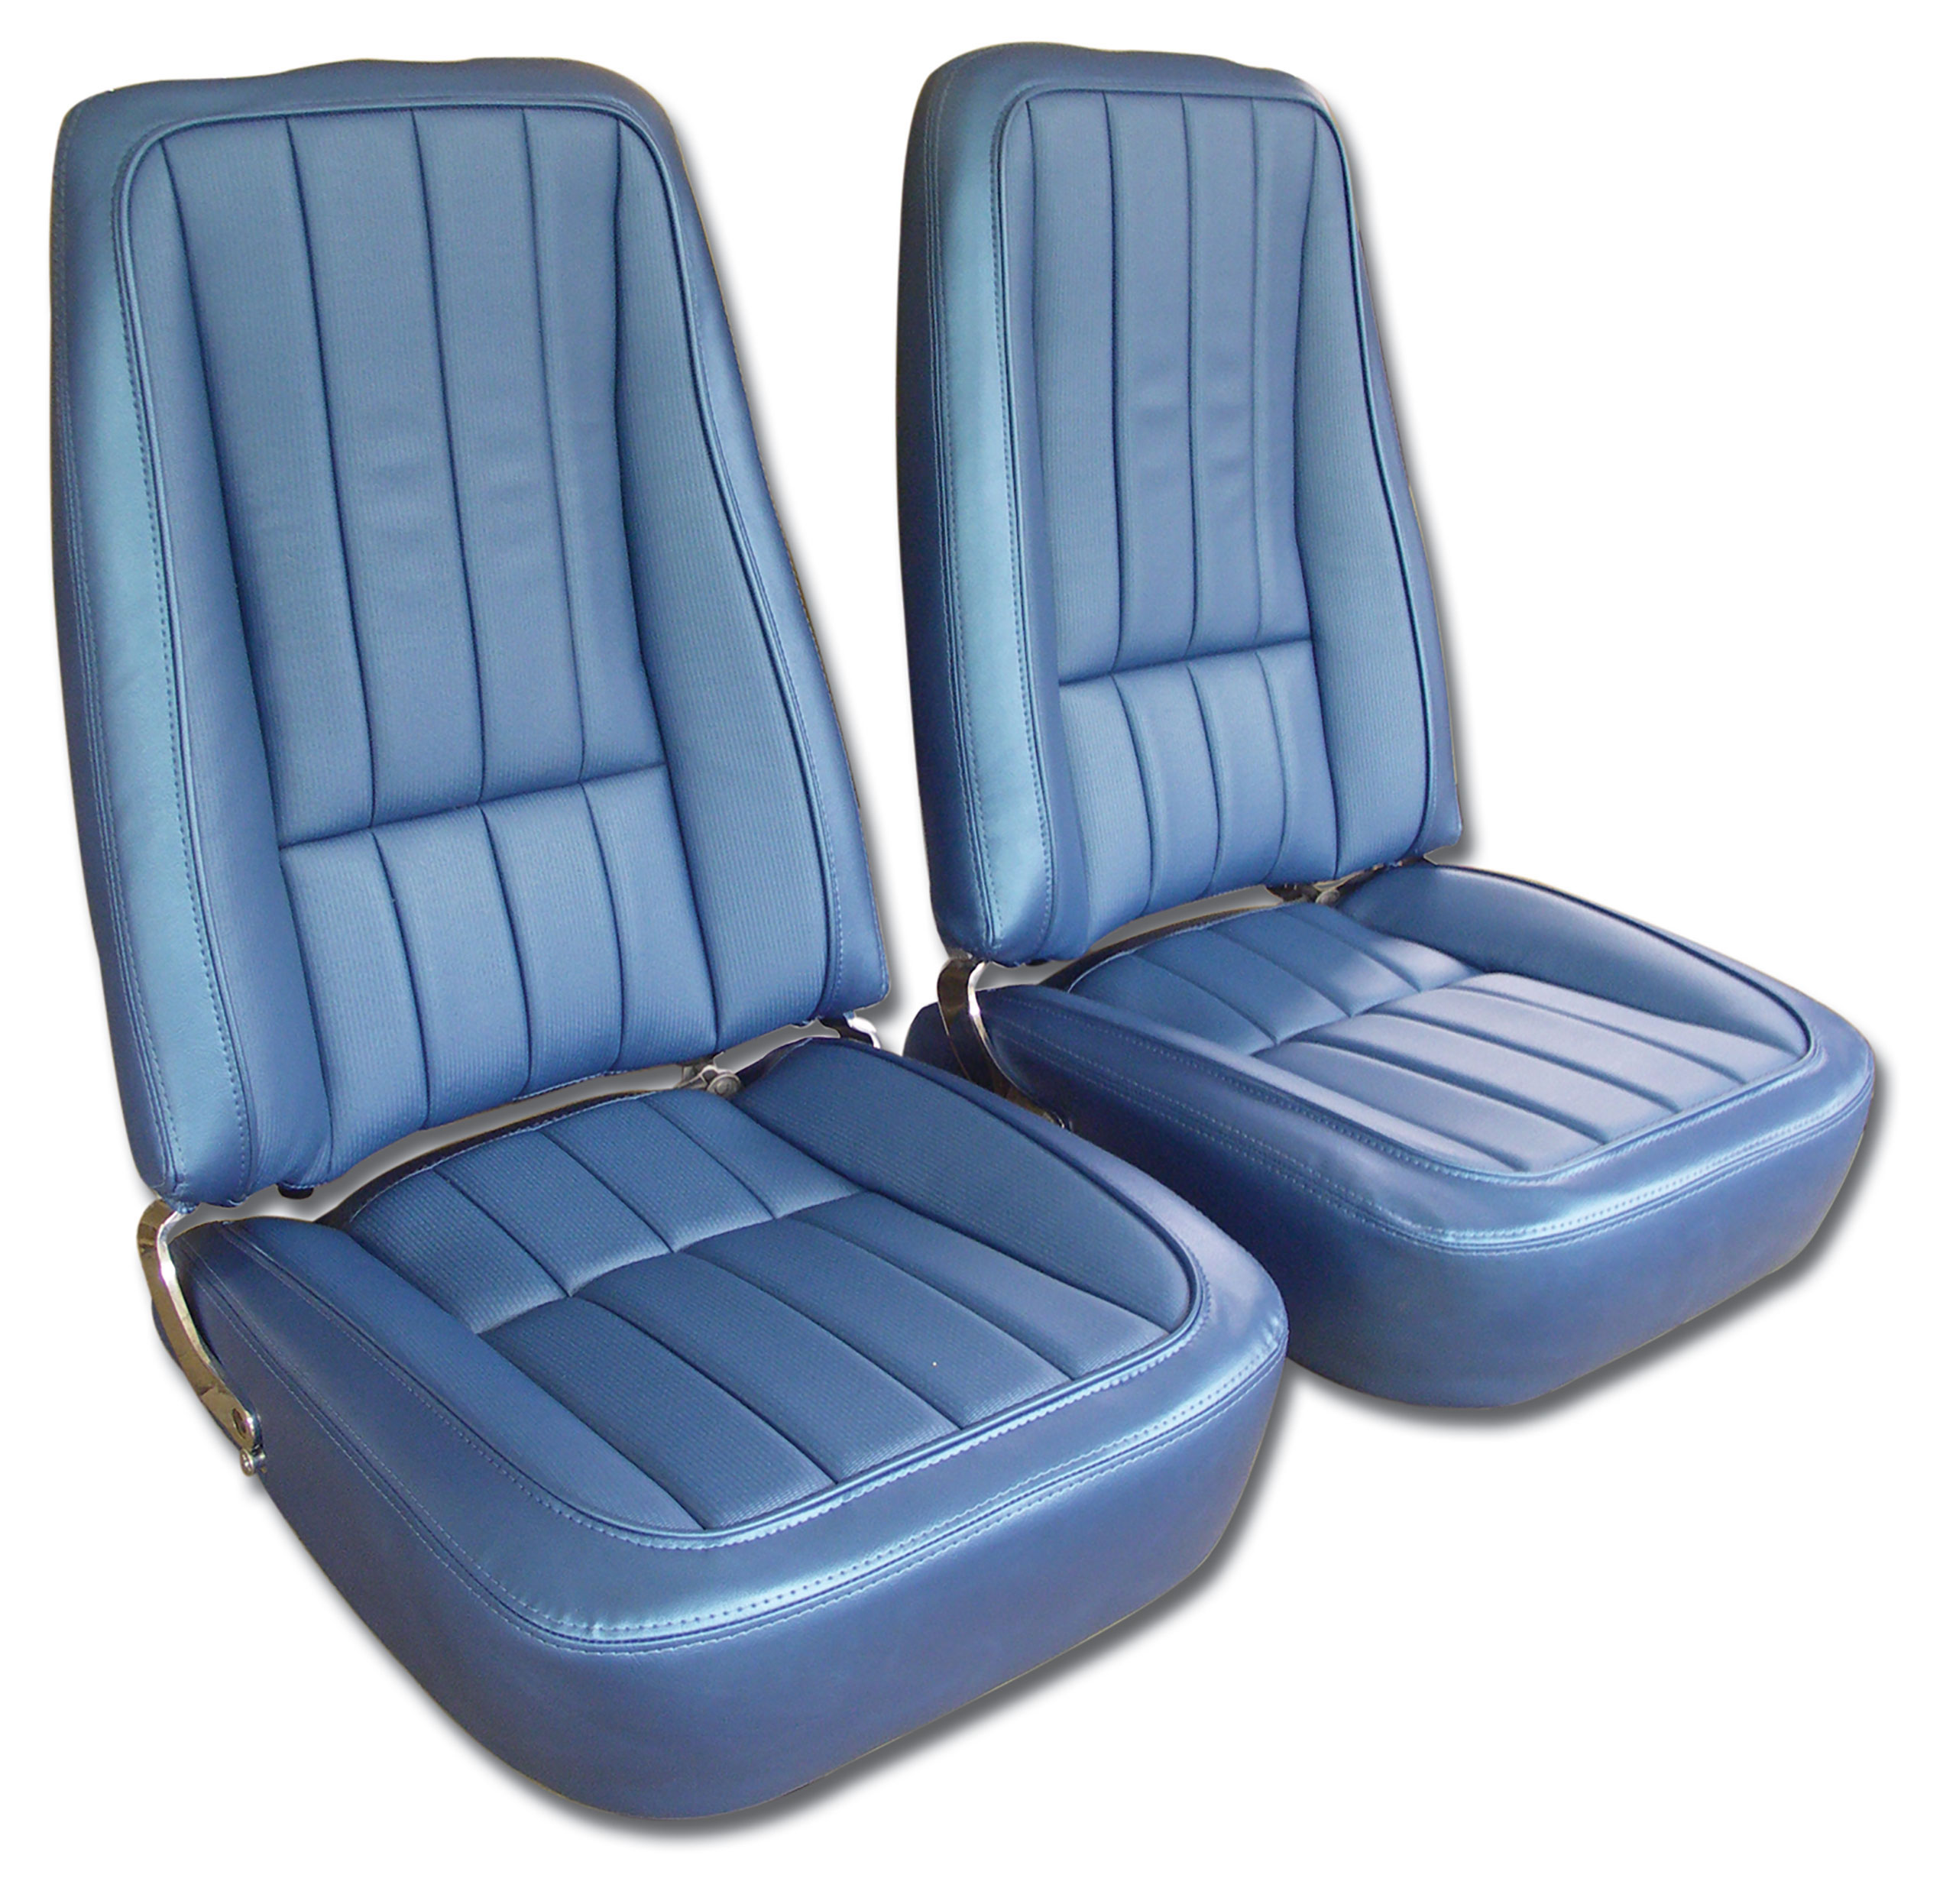 1969 Corvette C3 "Leather-Like" Vinyl Seat Covers Bright Blue CA-421141 